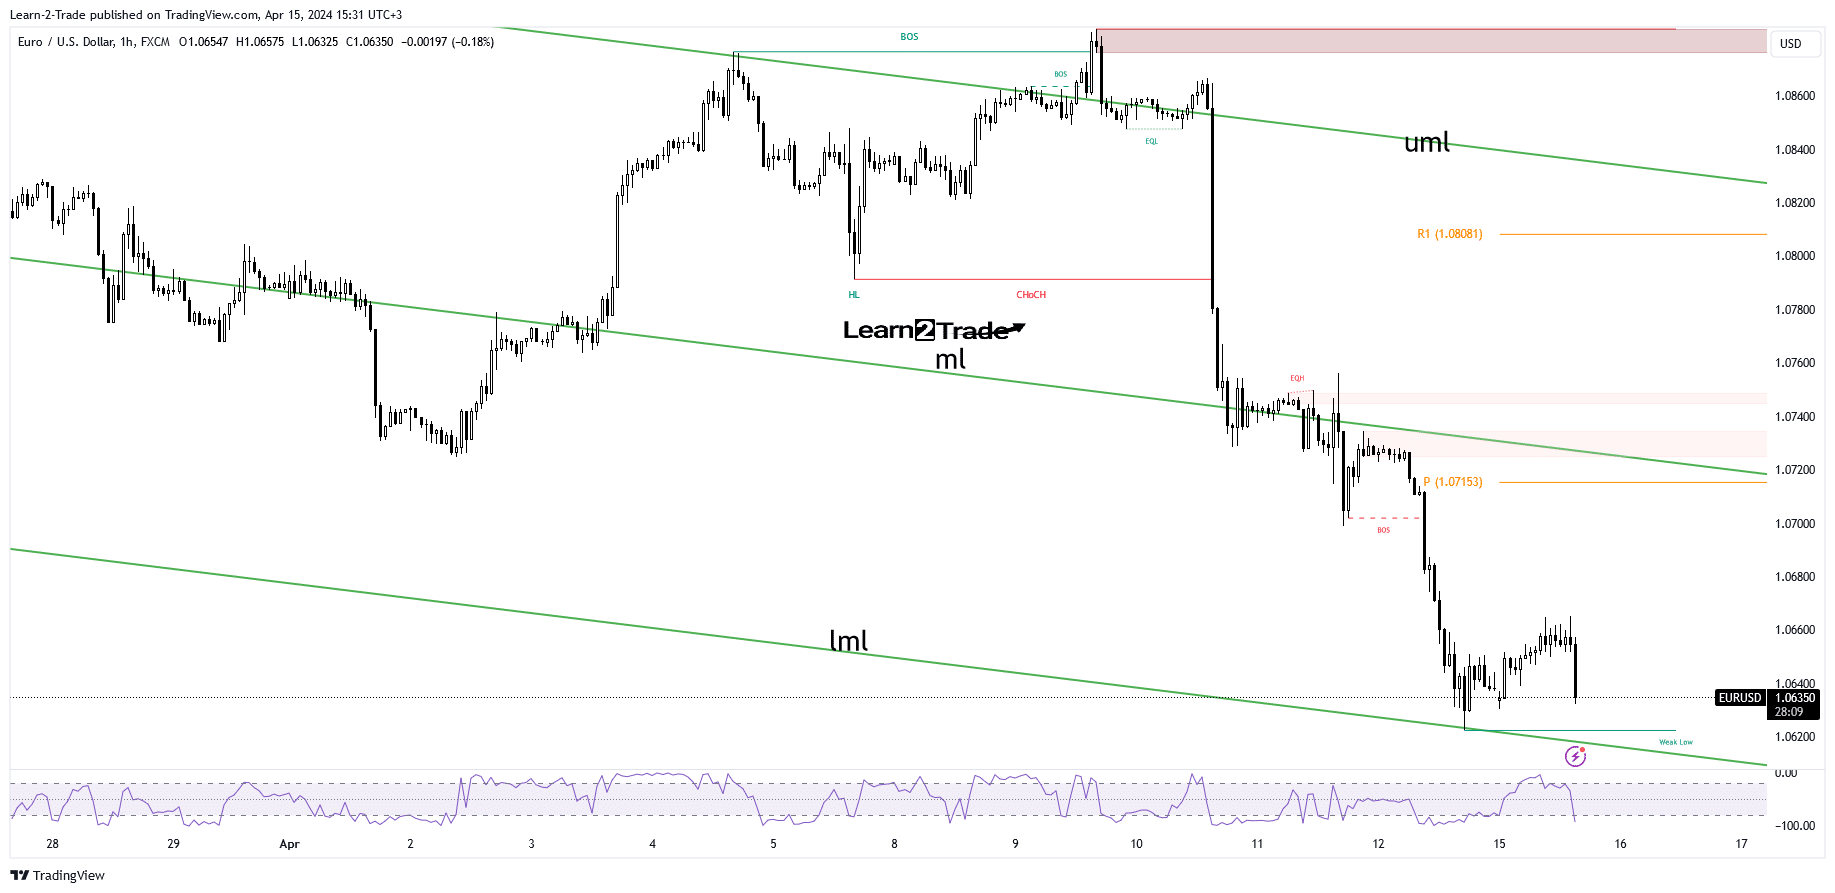 EUR/USD price